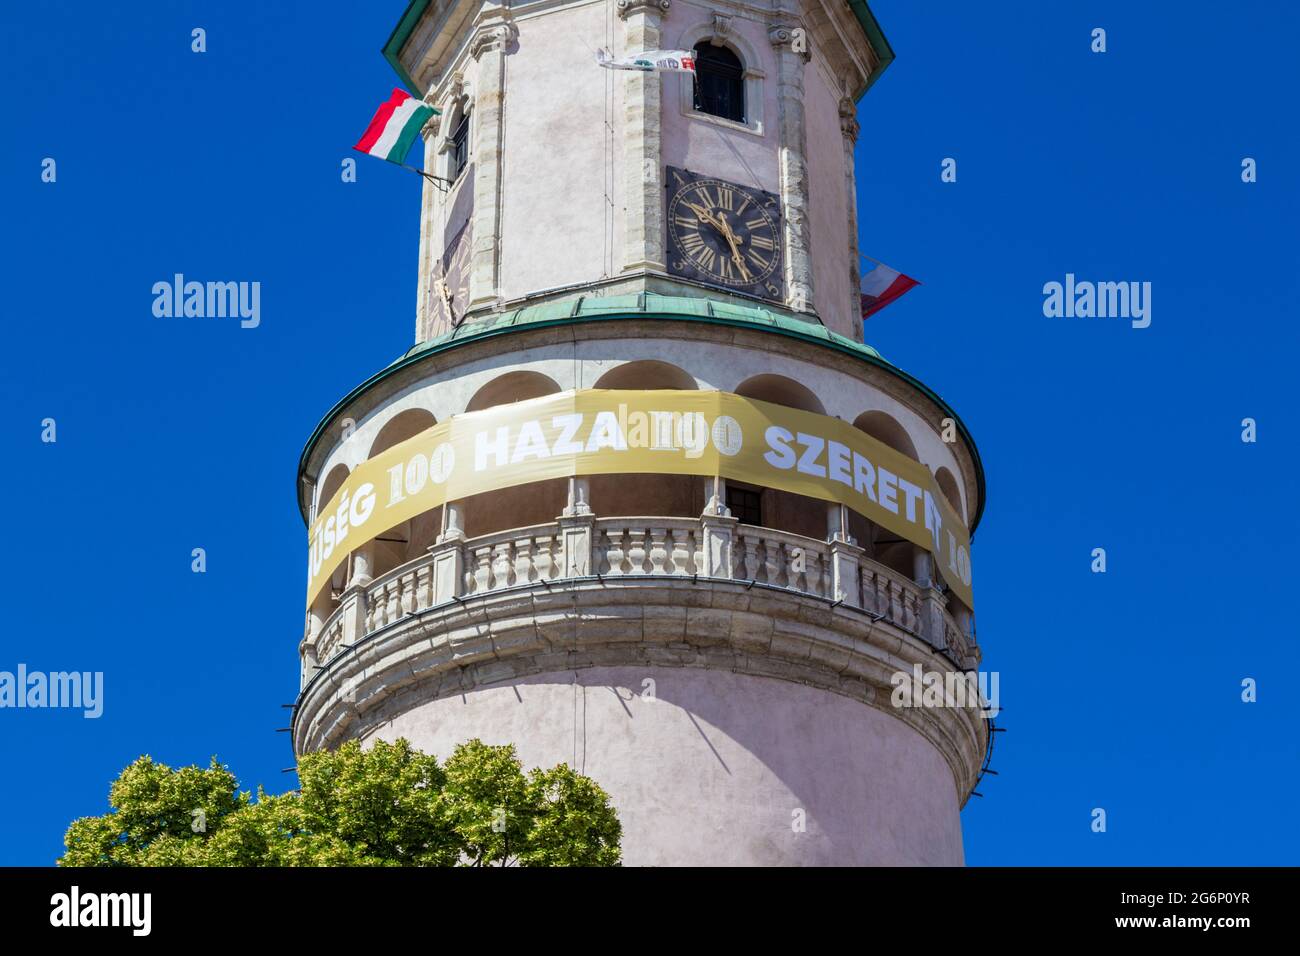 Firewatch Tower with banner 'Huseg-Haza-Szeretet' centenary of Sopron plebiscite, Sopron, Hungary Stock Photo